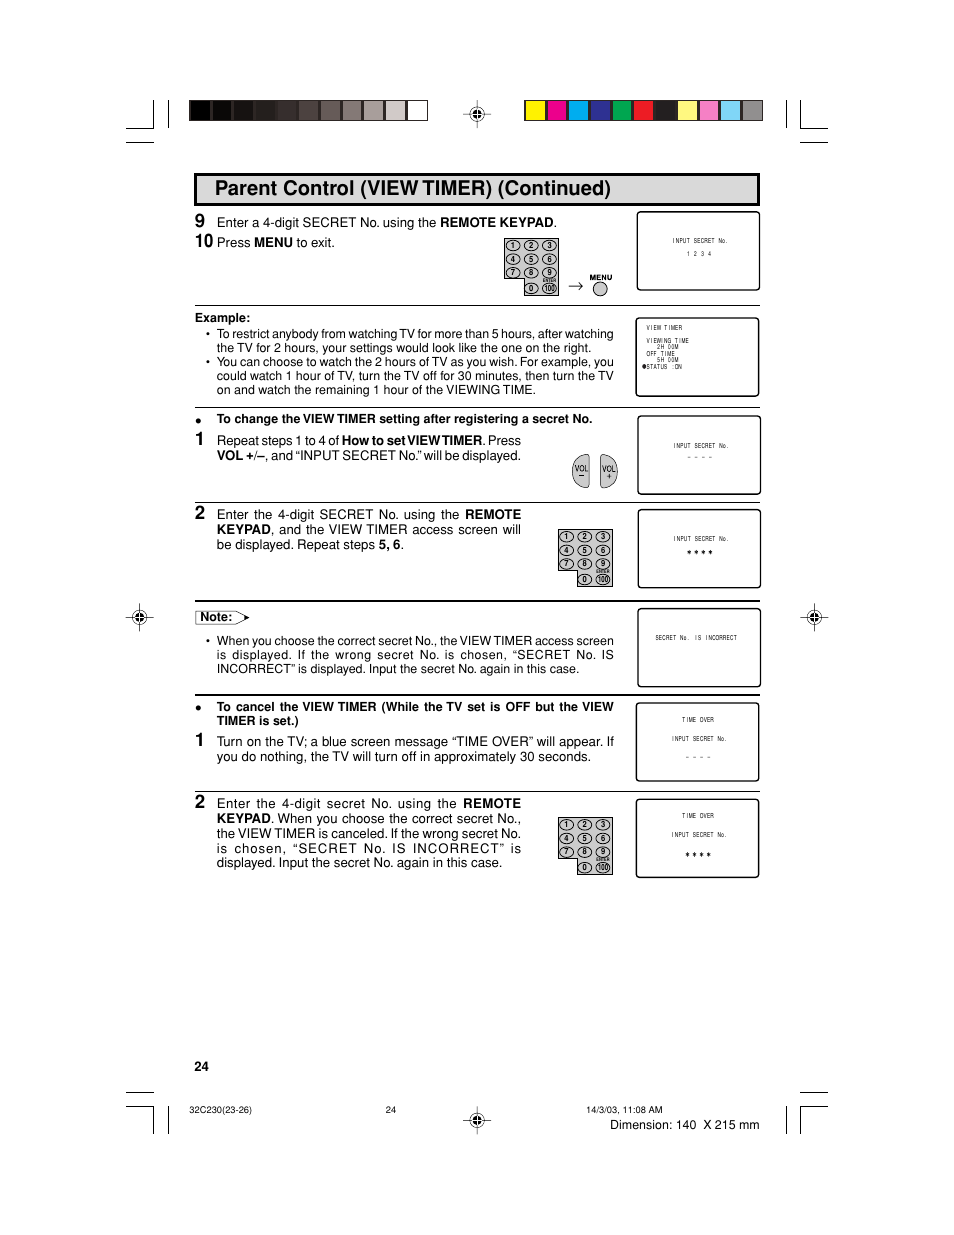 Parent control (view timer) (continued), Enter a 4-digit secret no. using the remote keypad, Press menu to exit | Sharp 32C230 User Manual | Page 24 / 52